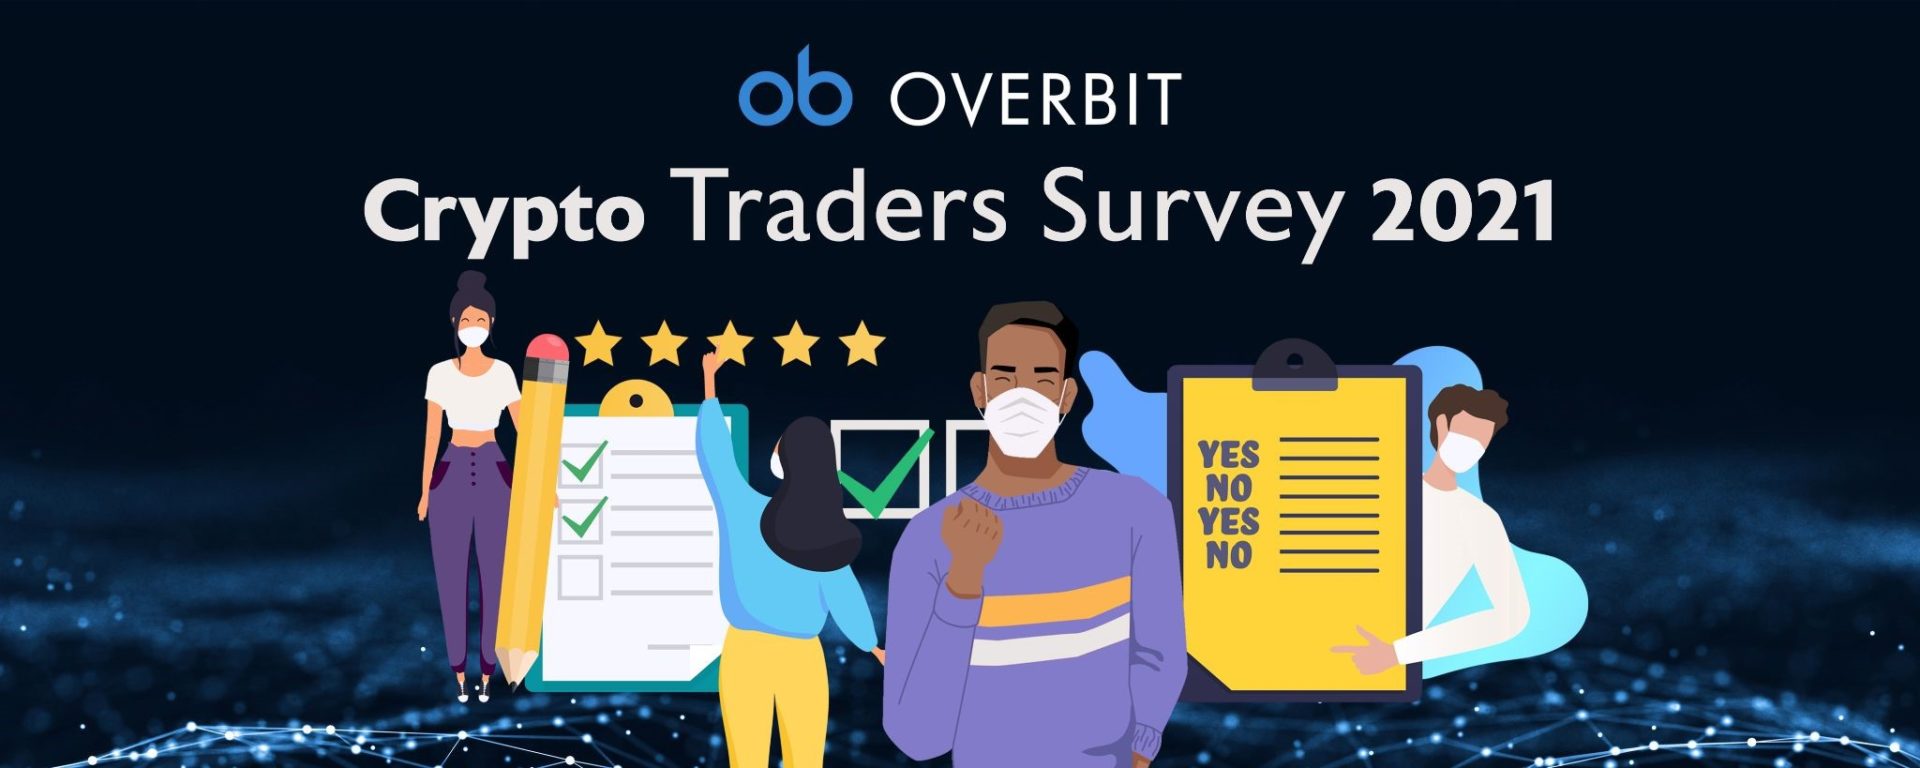 Overbit Crypto Traders Survey 2021-オーバービット仮想通貨取引調査-